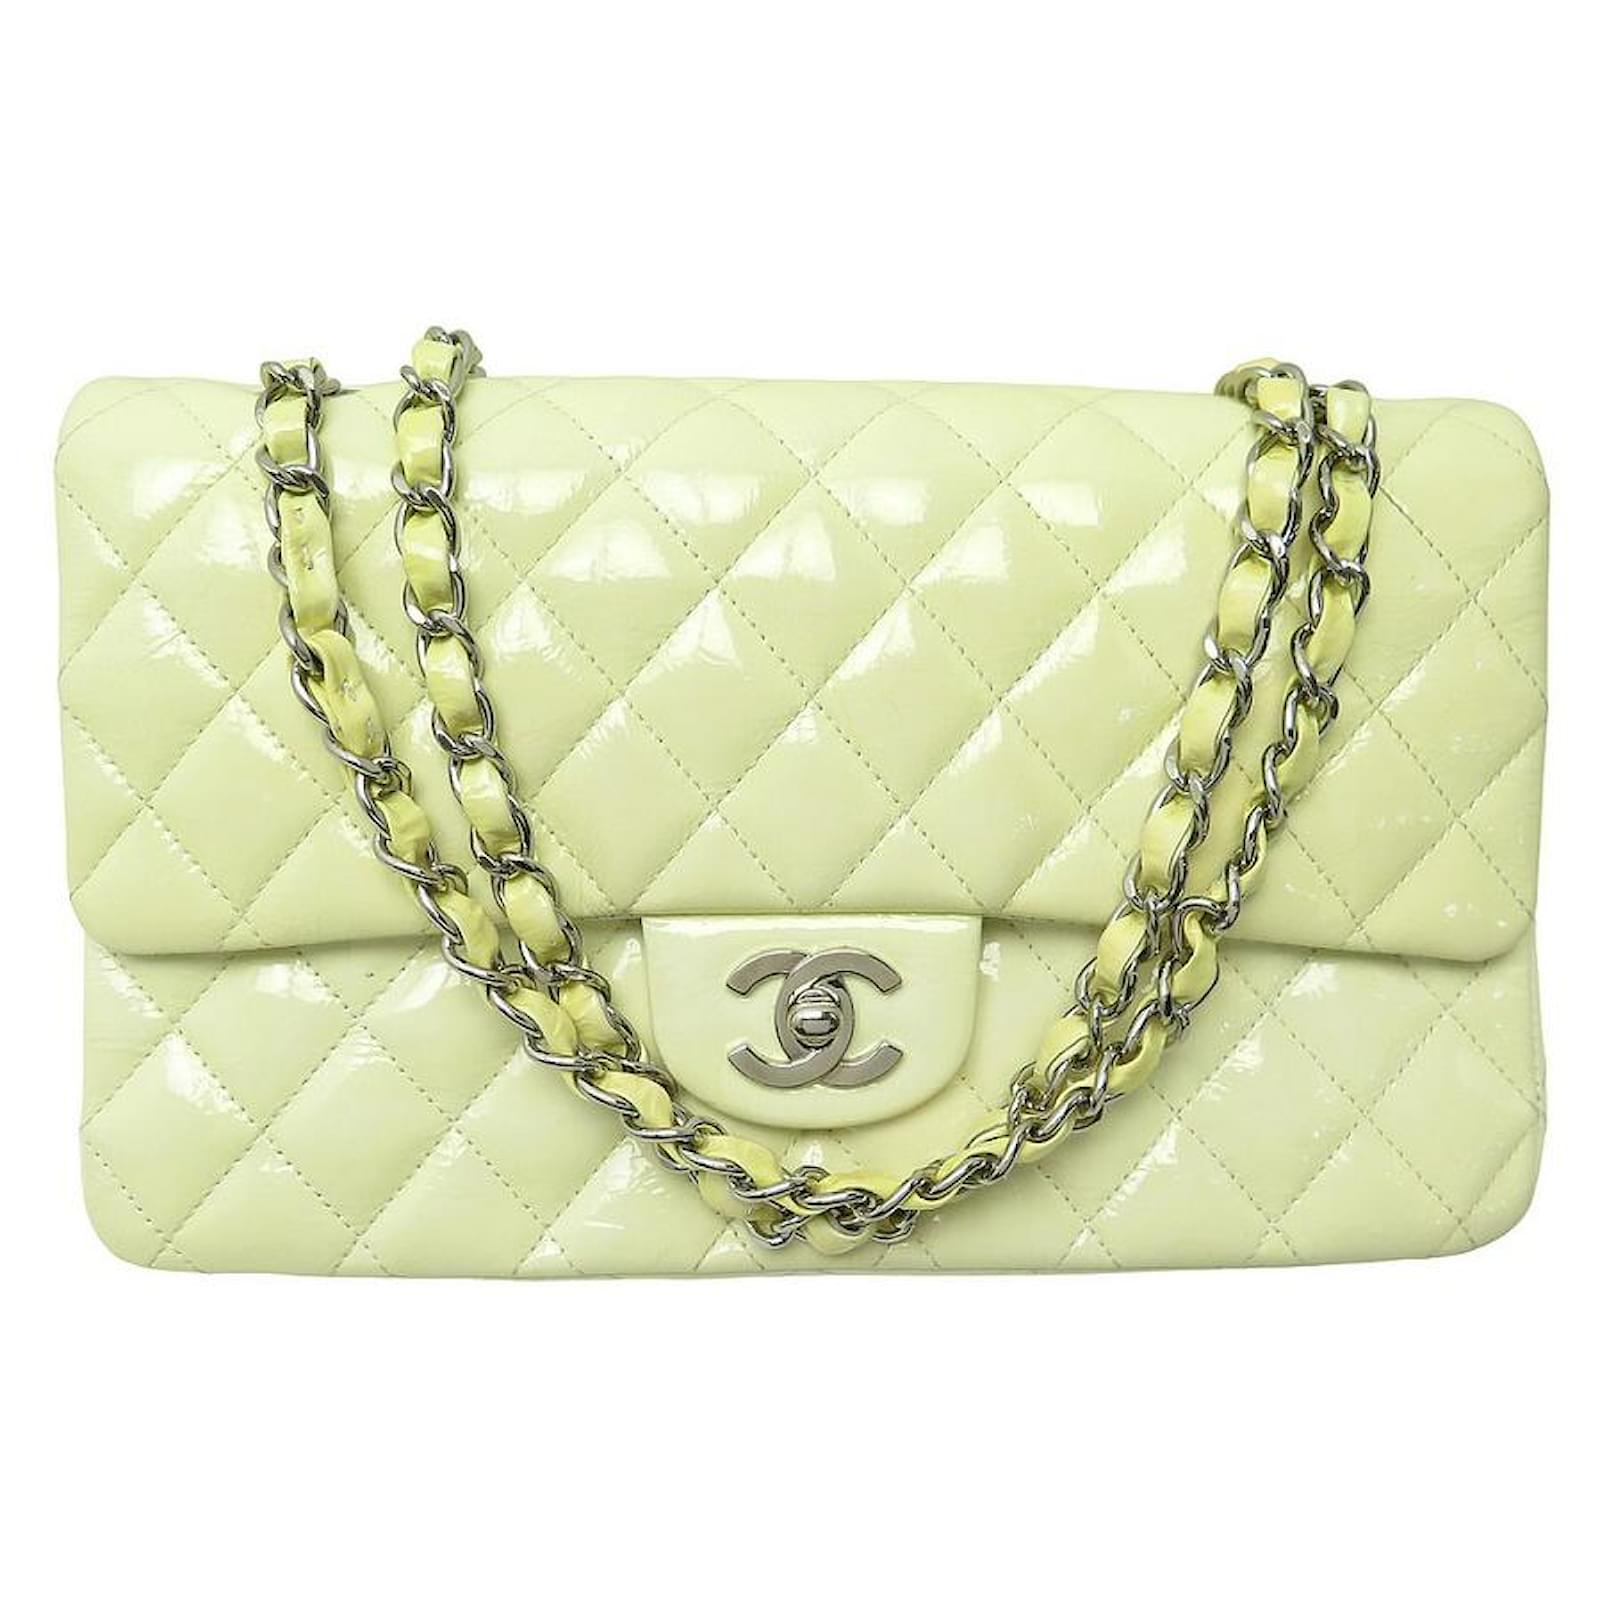 Pale green rectangular mock croc purse